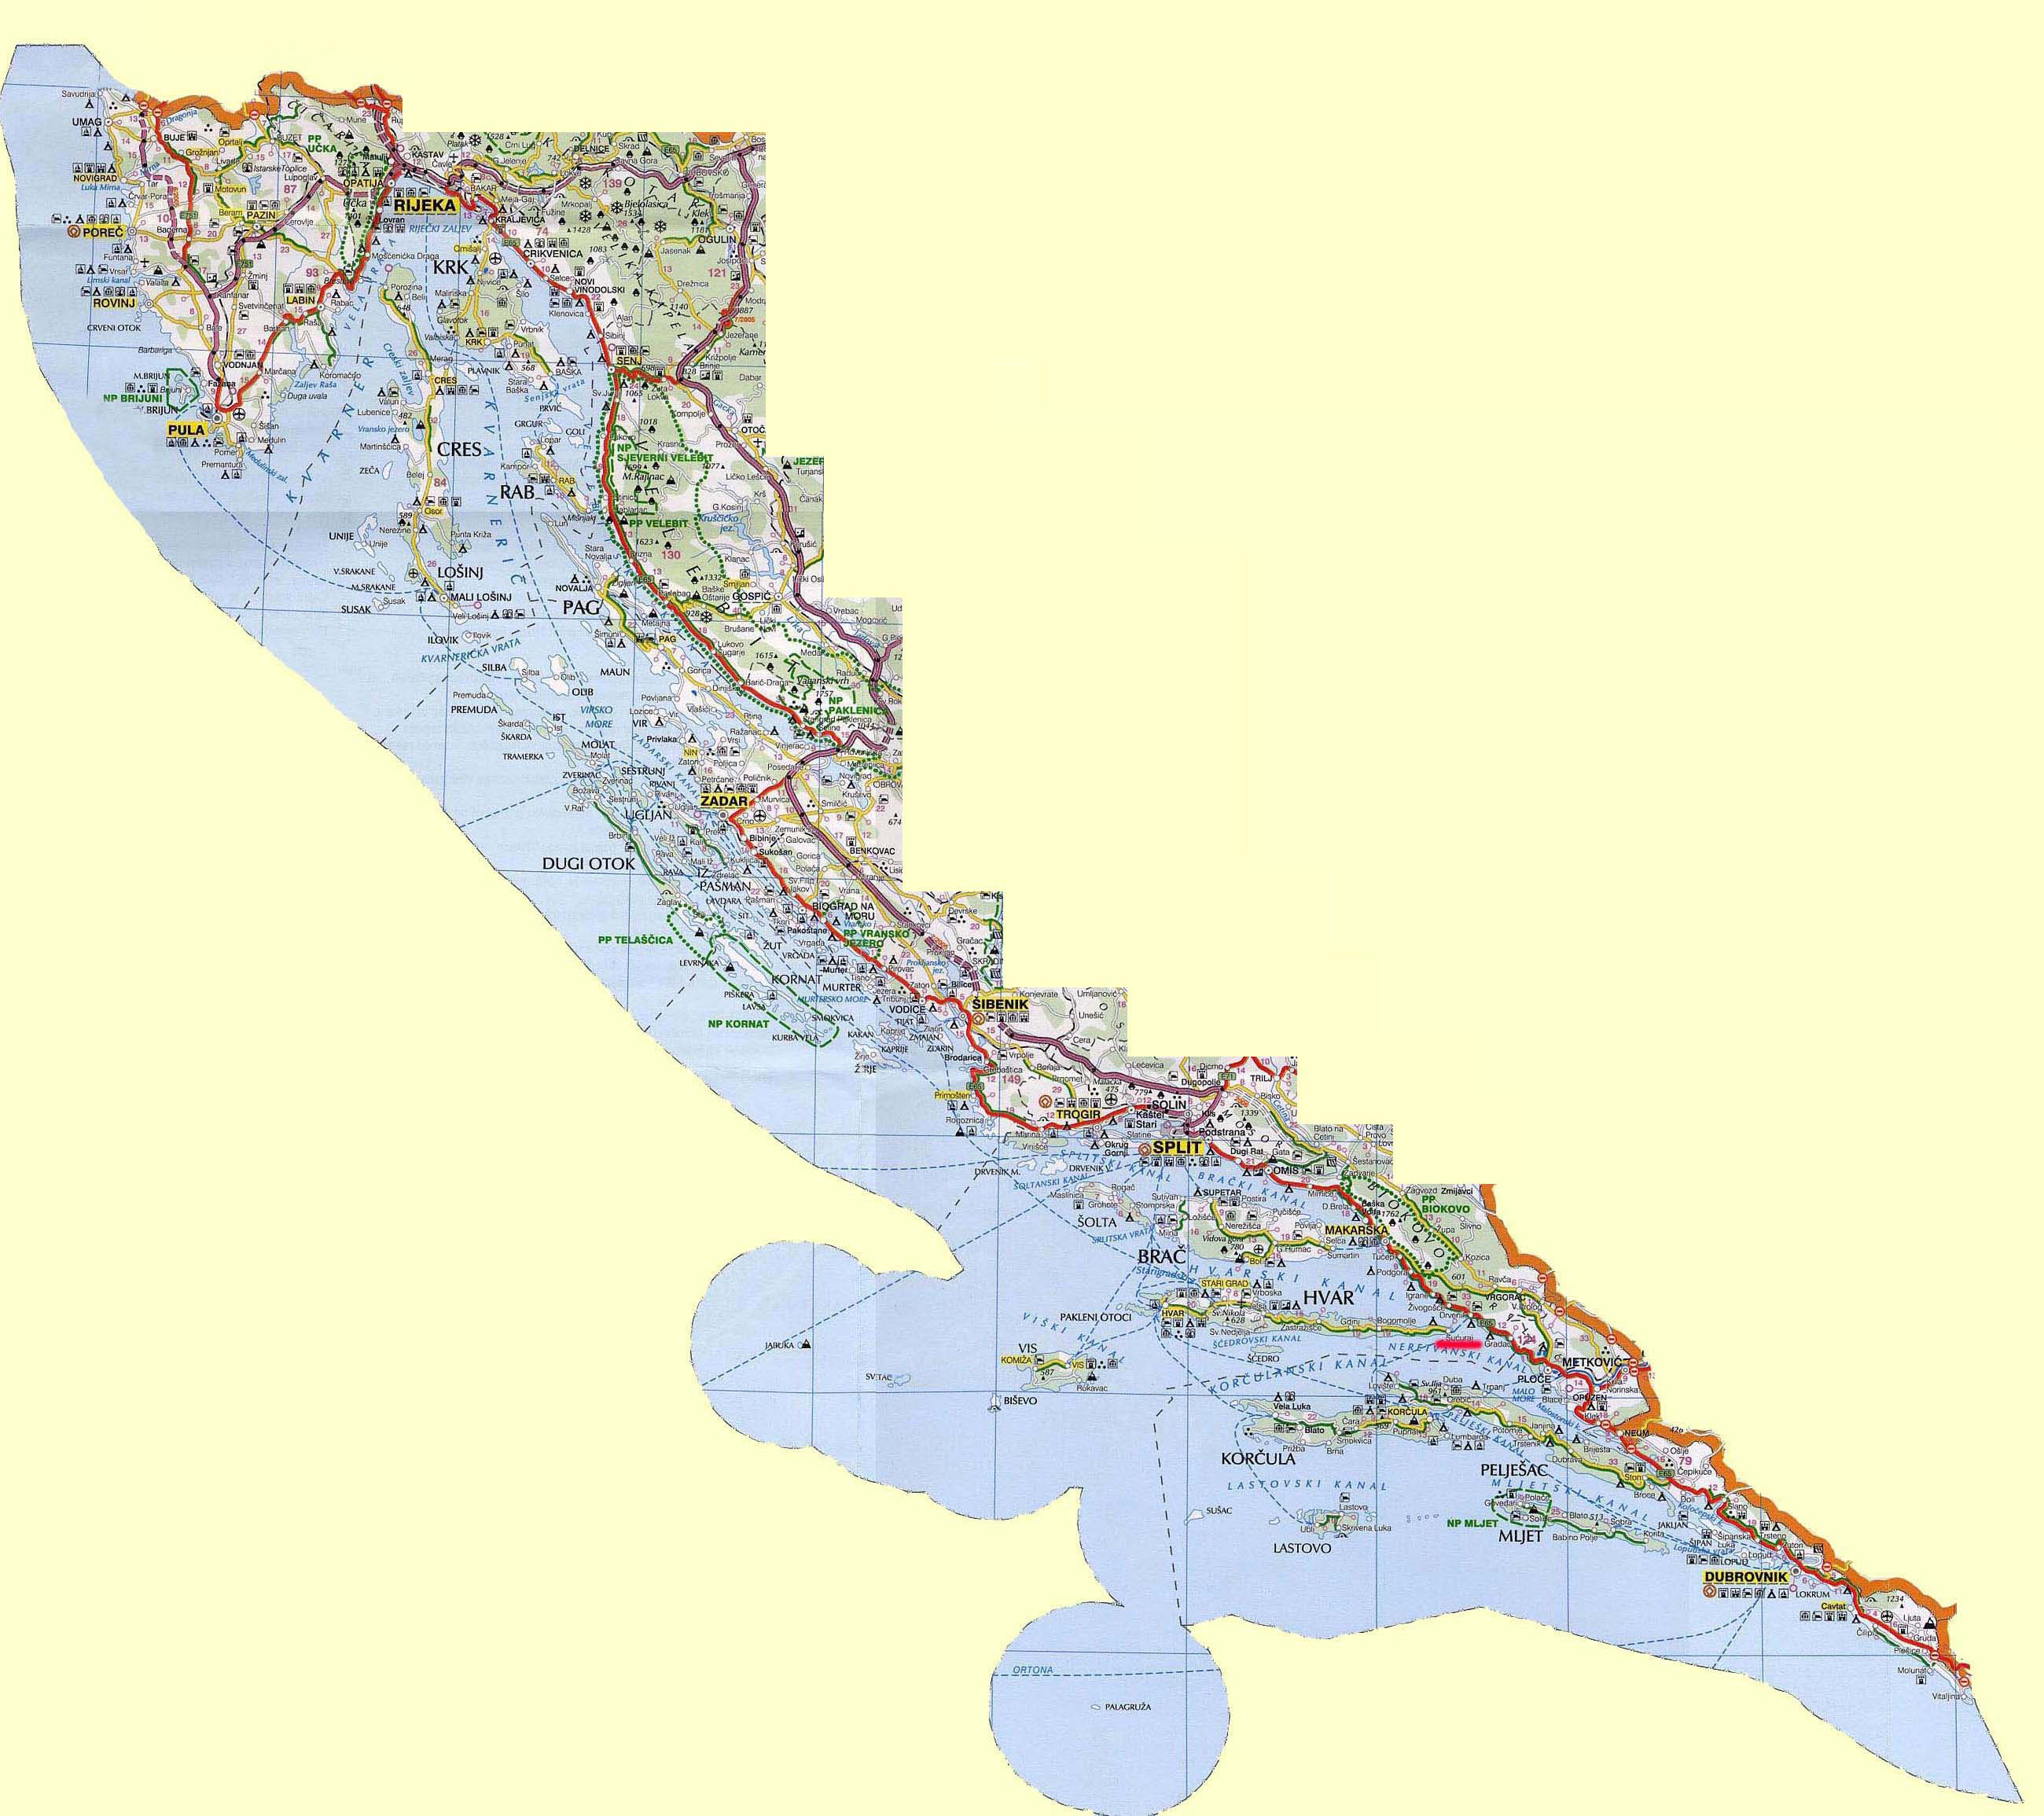 Detailed road map of the Croatian | Croatia Europe | Mapsland | Maps of the World